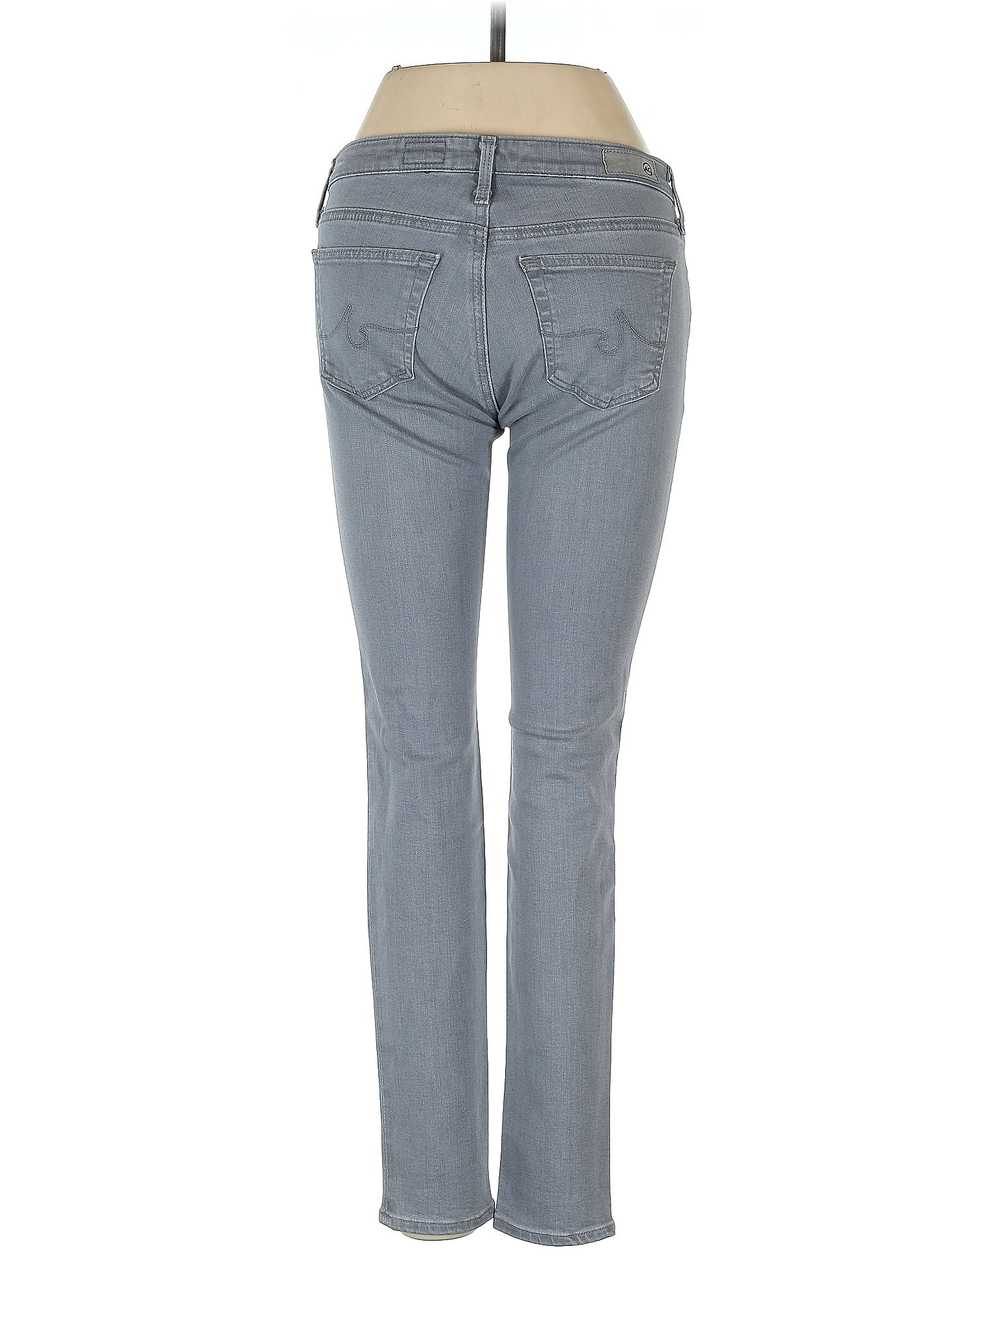 Adriano Goldschmied Women Gray Jeans 25W - image 2